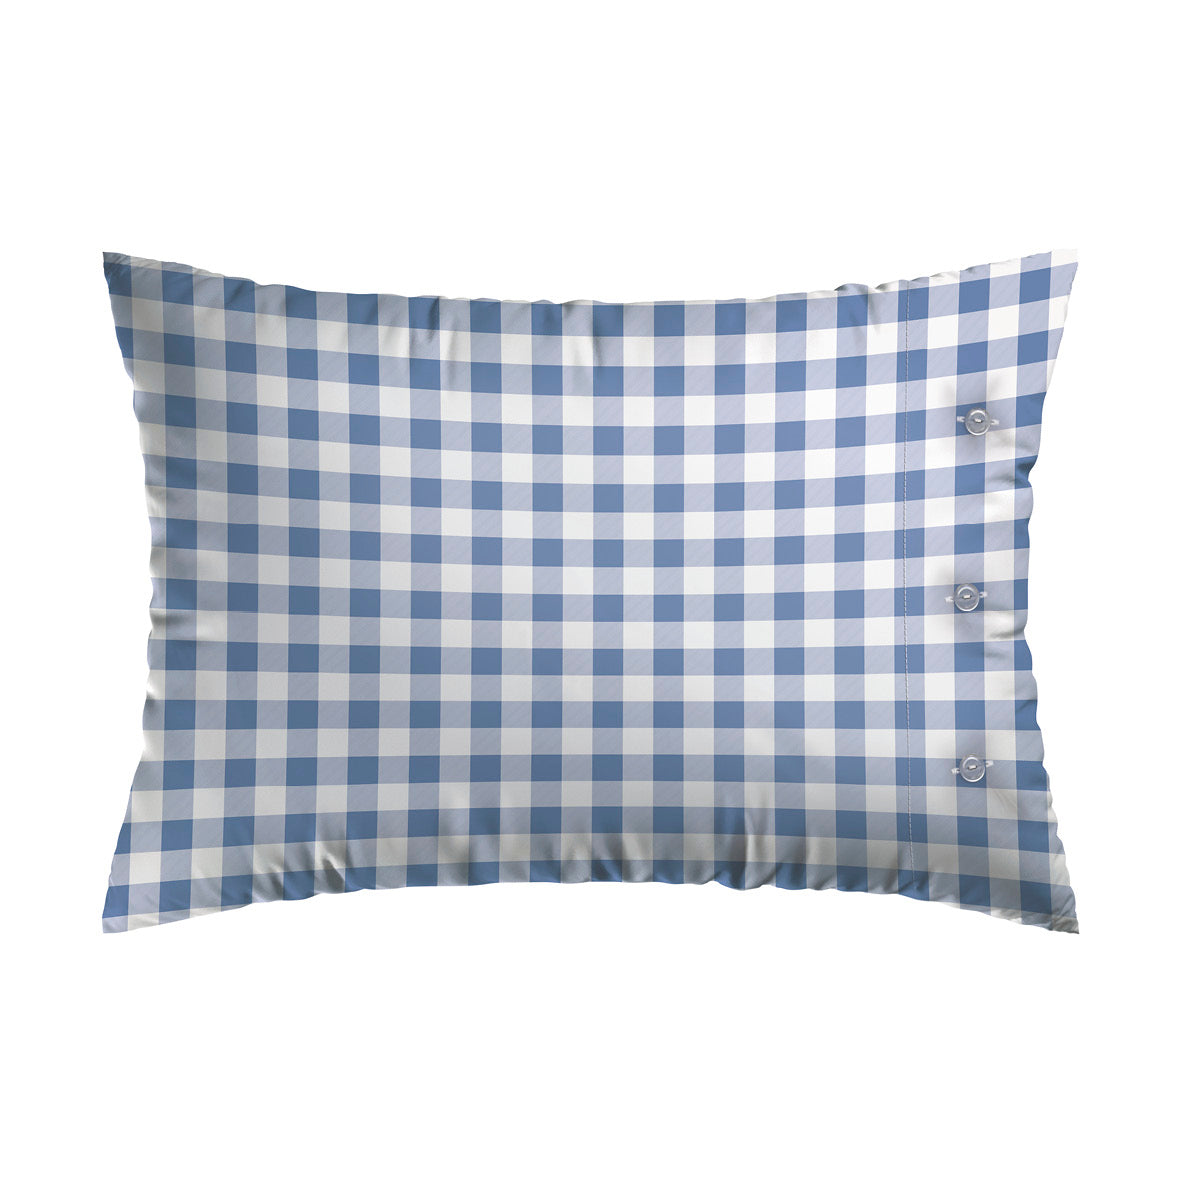 Set of 2 pillowcases percale cotton checkered - Light blue 2 x (50 x 70 cm)